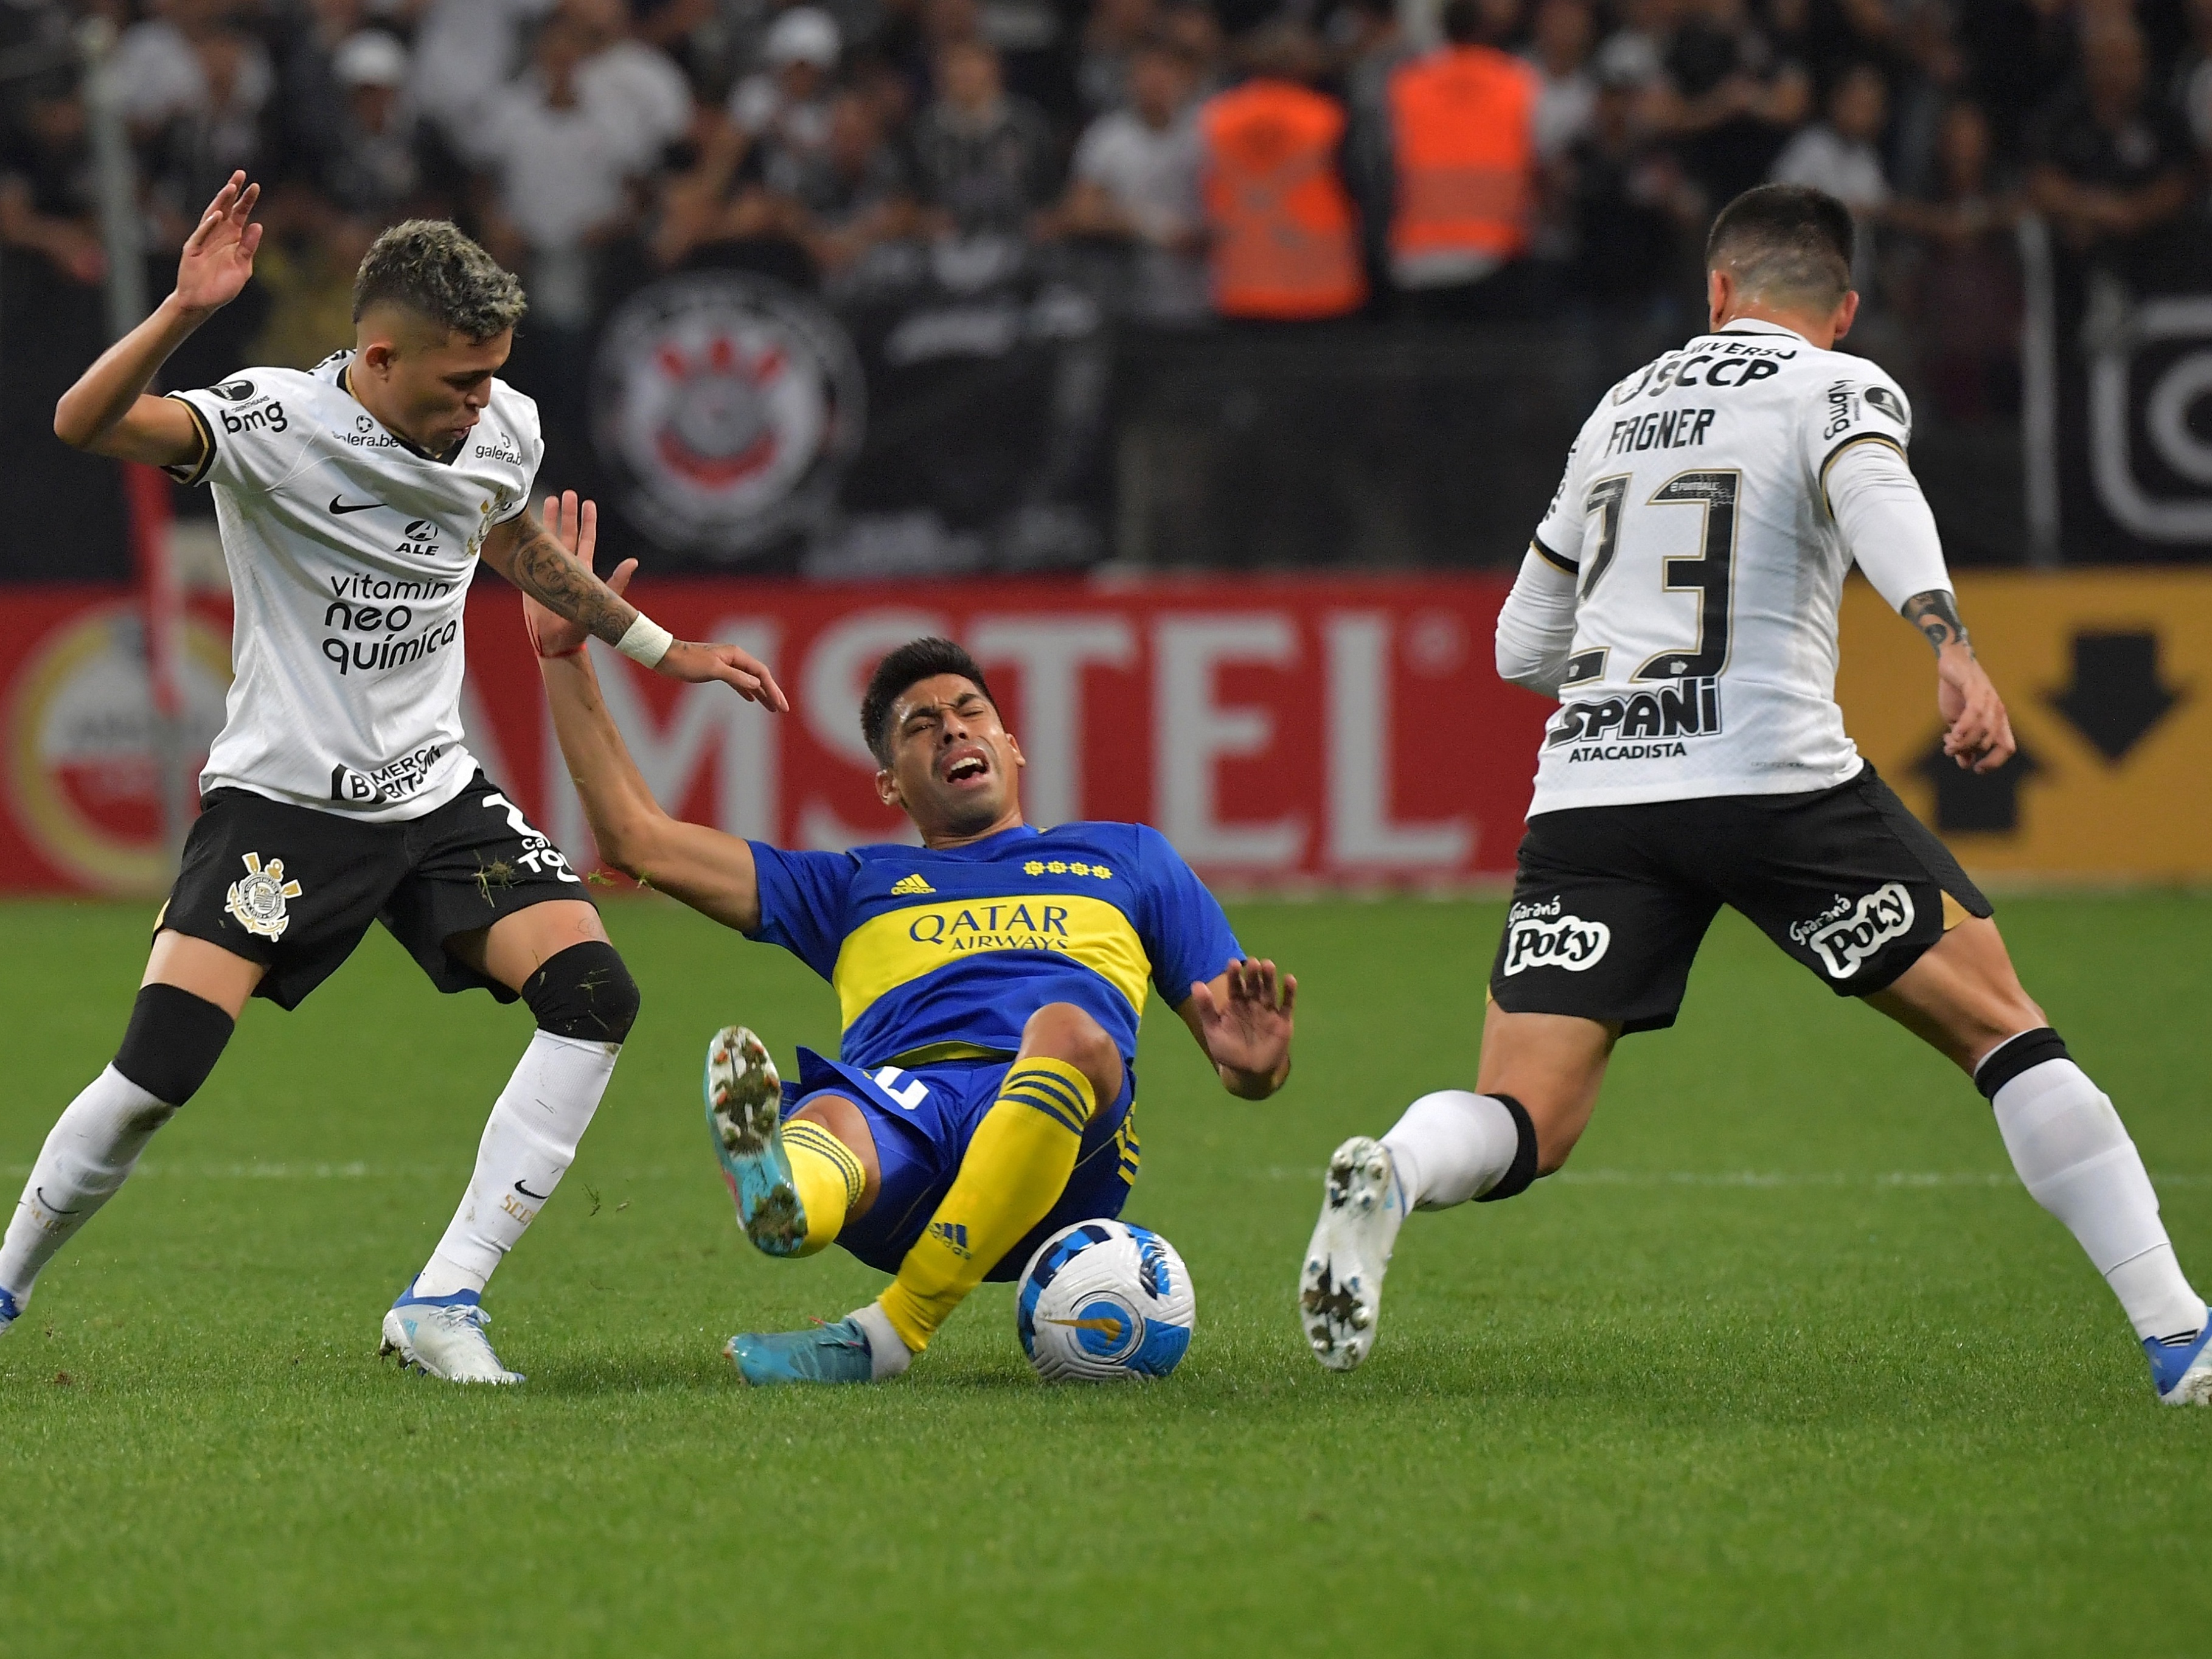 Confrontos entre Corinthians e Racing Club